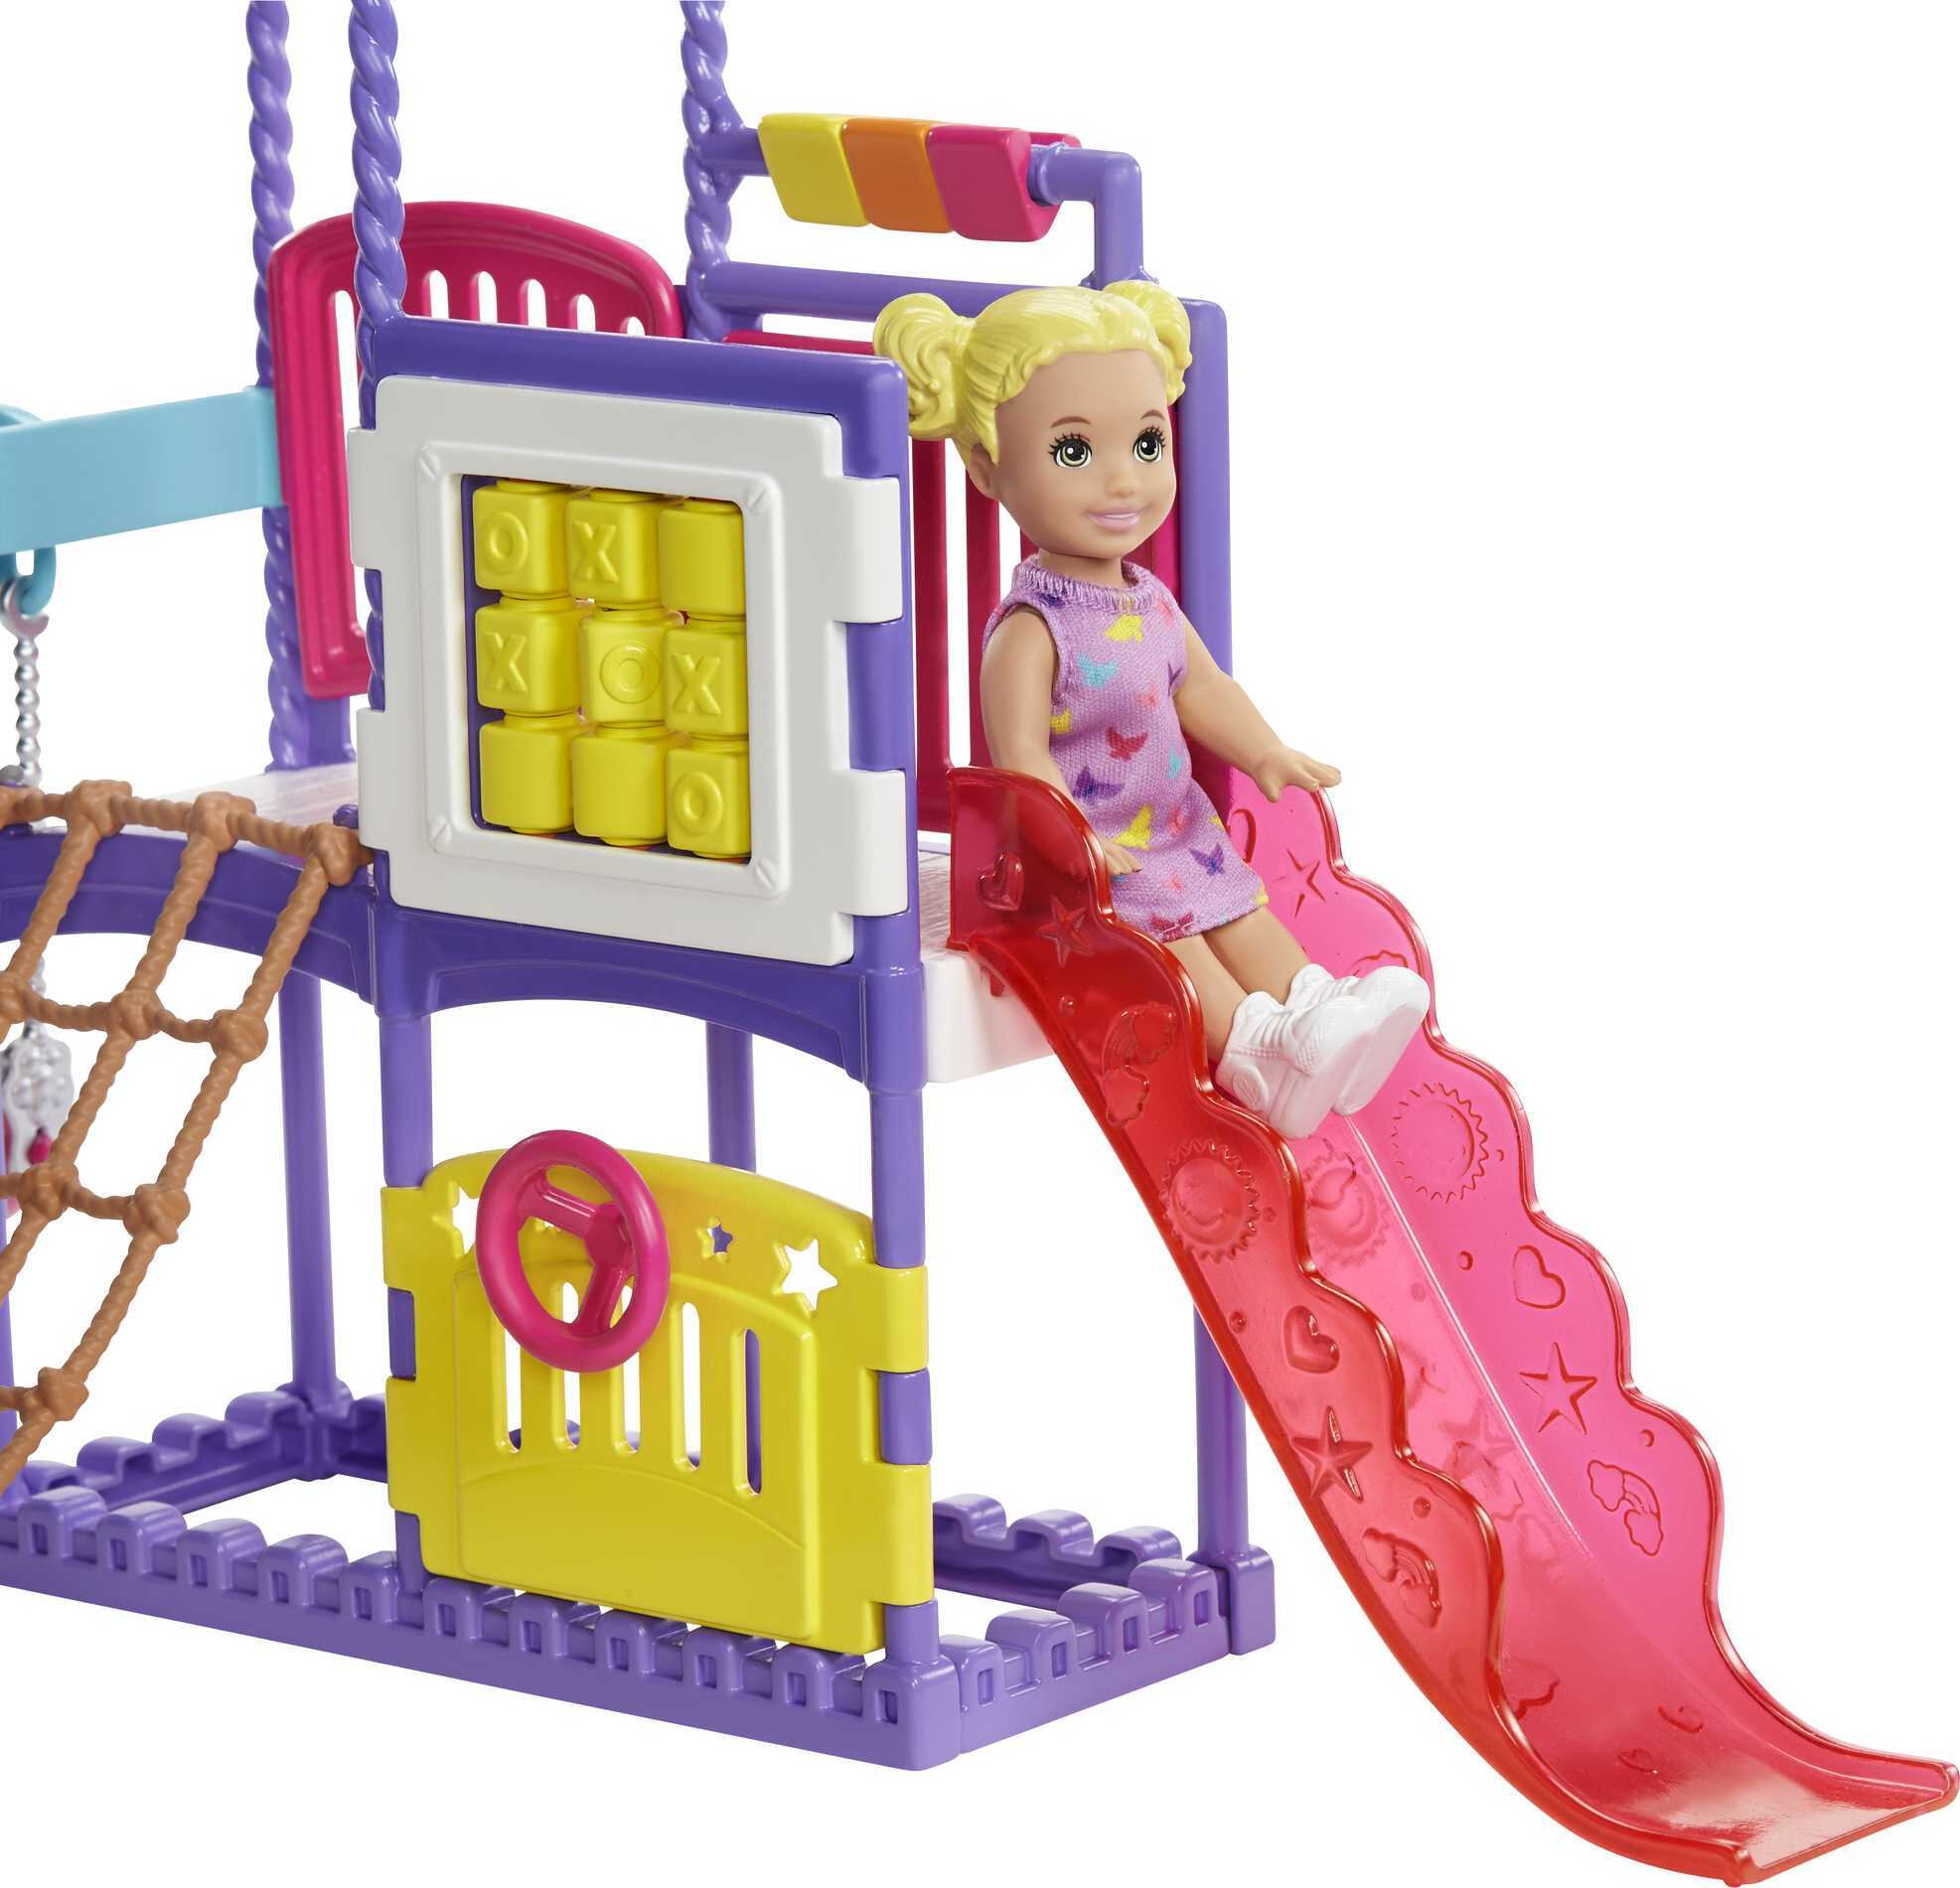 Barbie Skipper Babysitters Inc. Climb ‘n Explore Playground Dolls & Playset - image 4 of 7